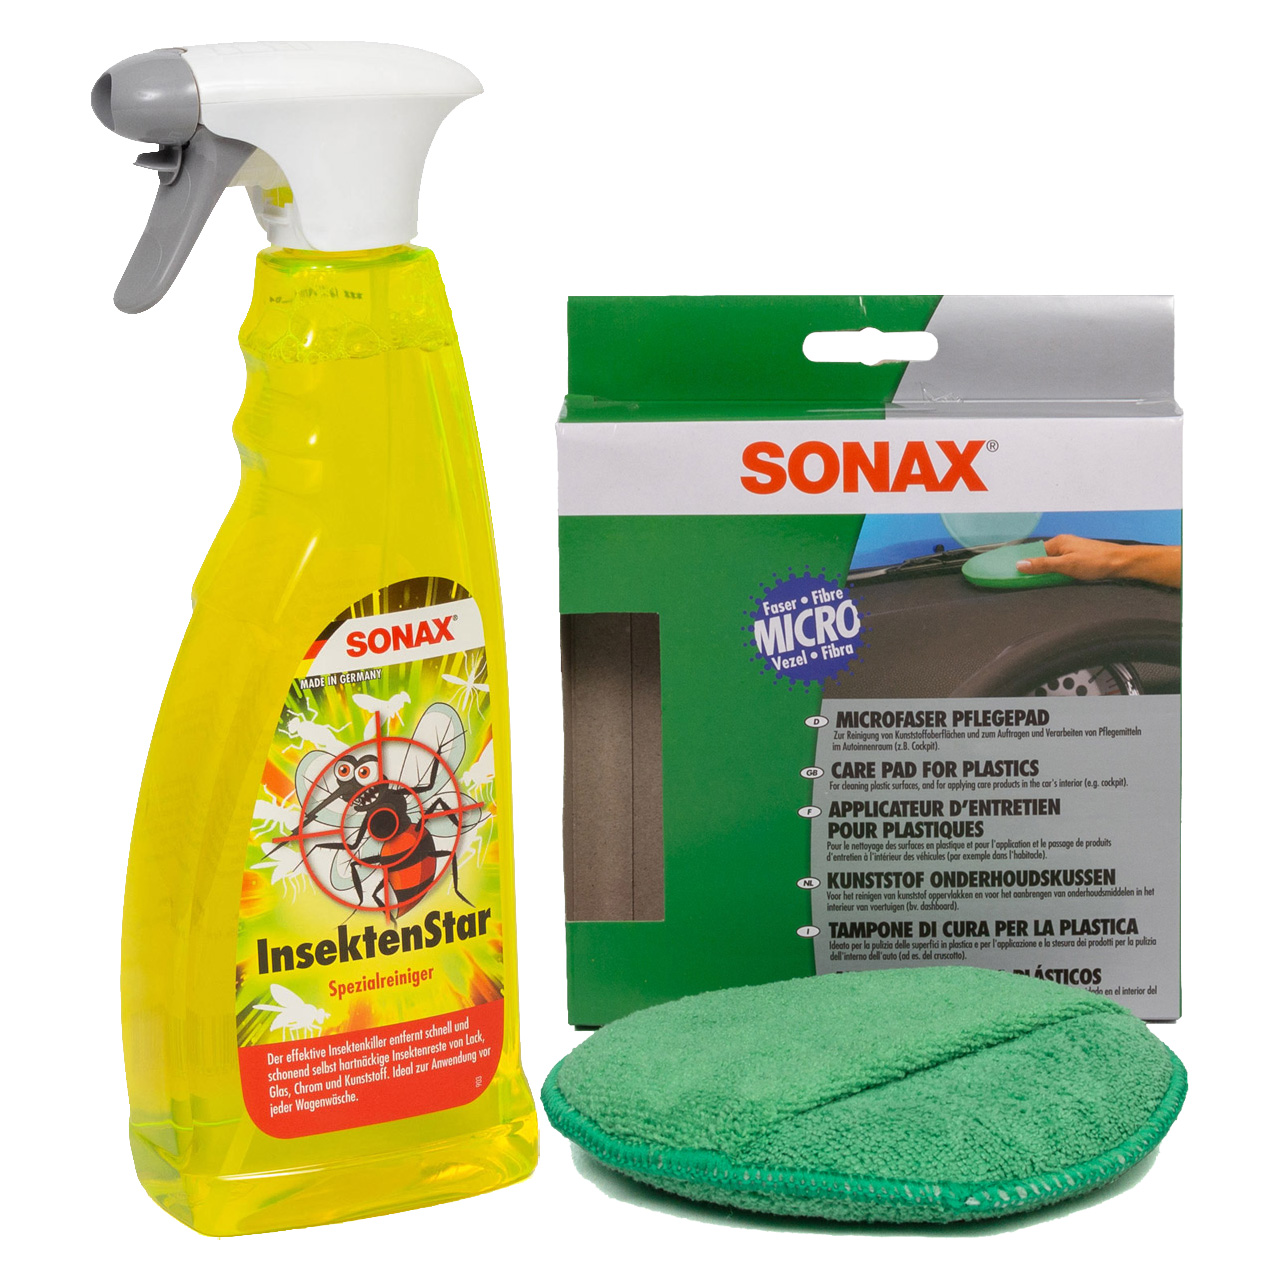 SONAX InsektenStar Insektenentferner Insektenkiller 750ml + Microfaser Pflegepad